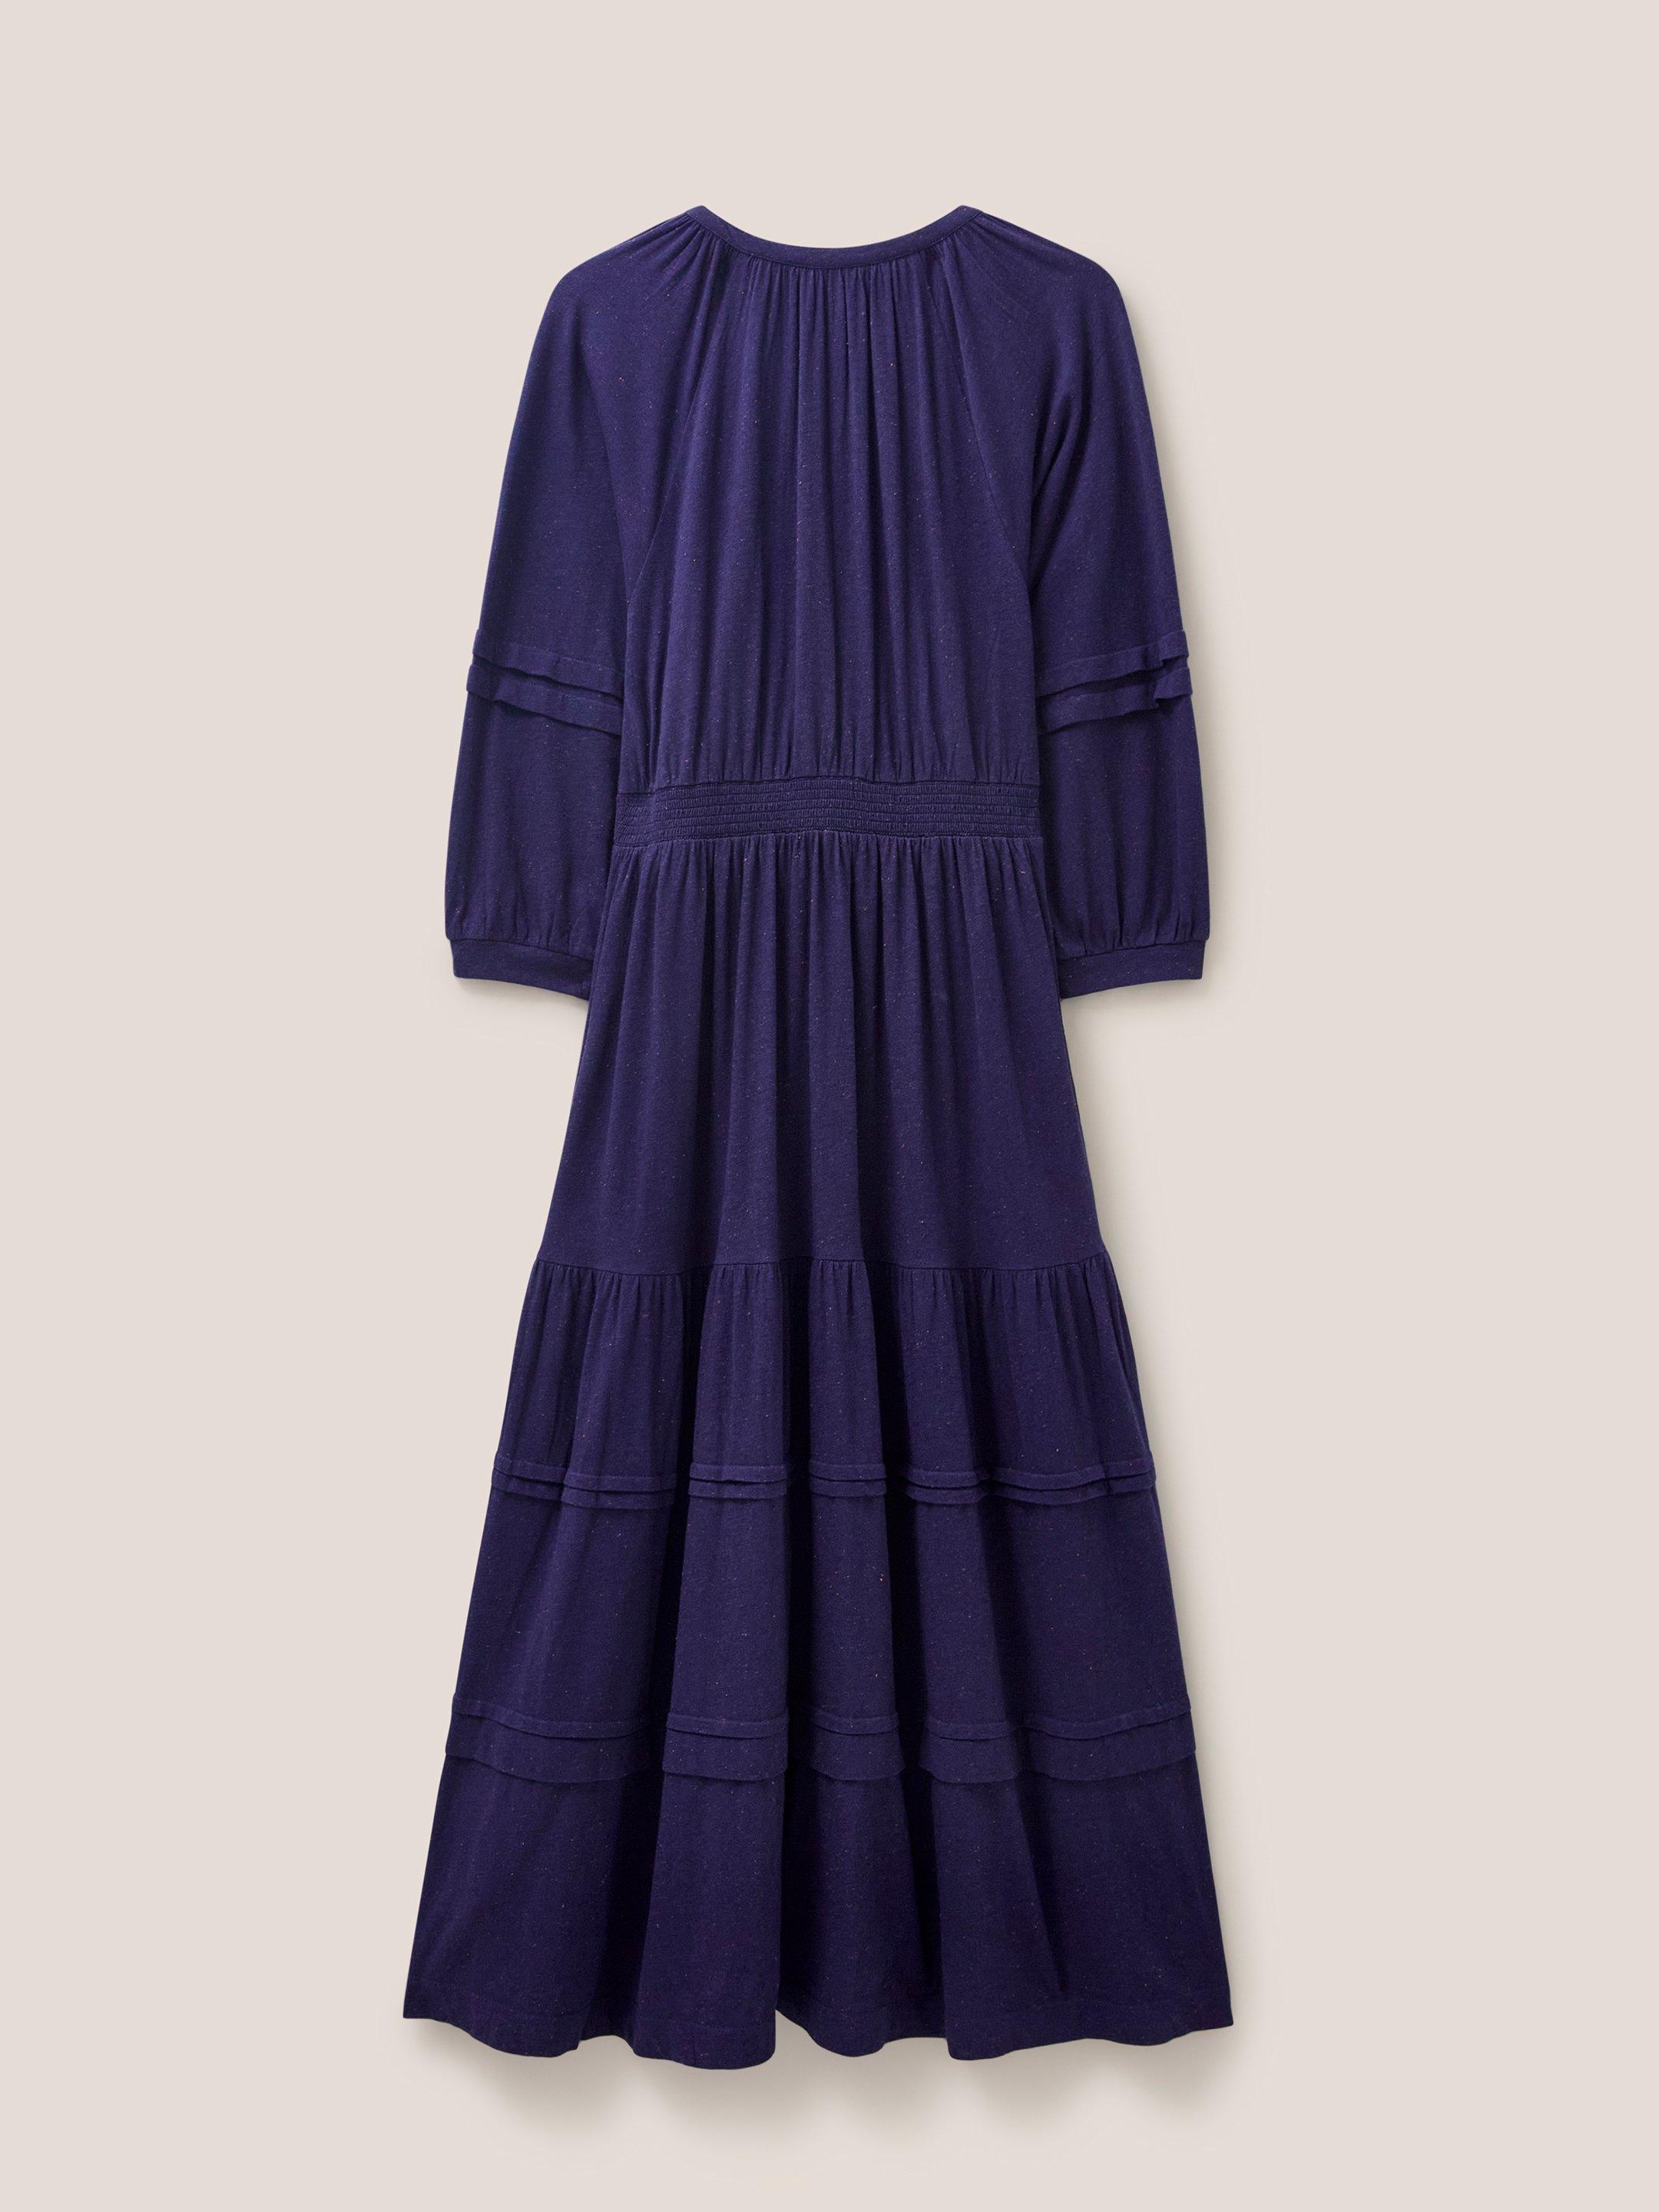 Hallie Soft Jersey Midi Dress in NAVY MULTI - FLAT BACK